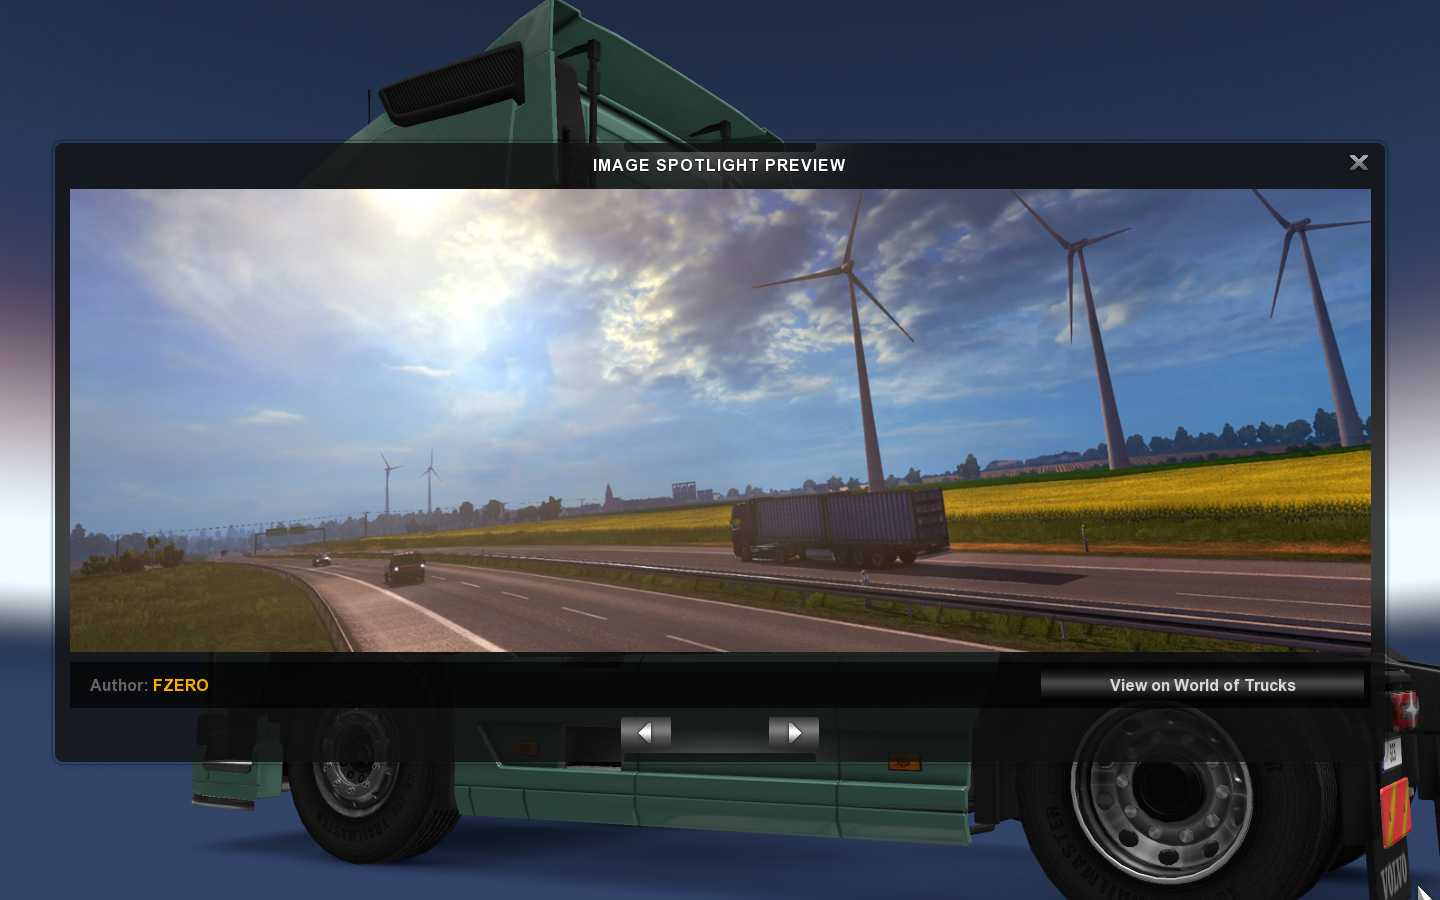 Heart of russia для euro truck simulator 2 перенесли. возможно, на десятилетие